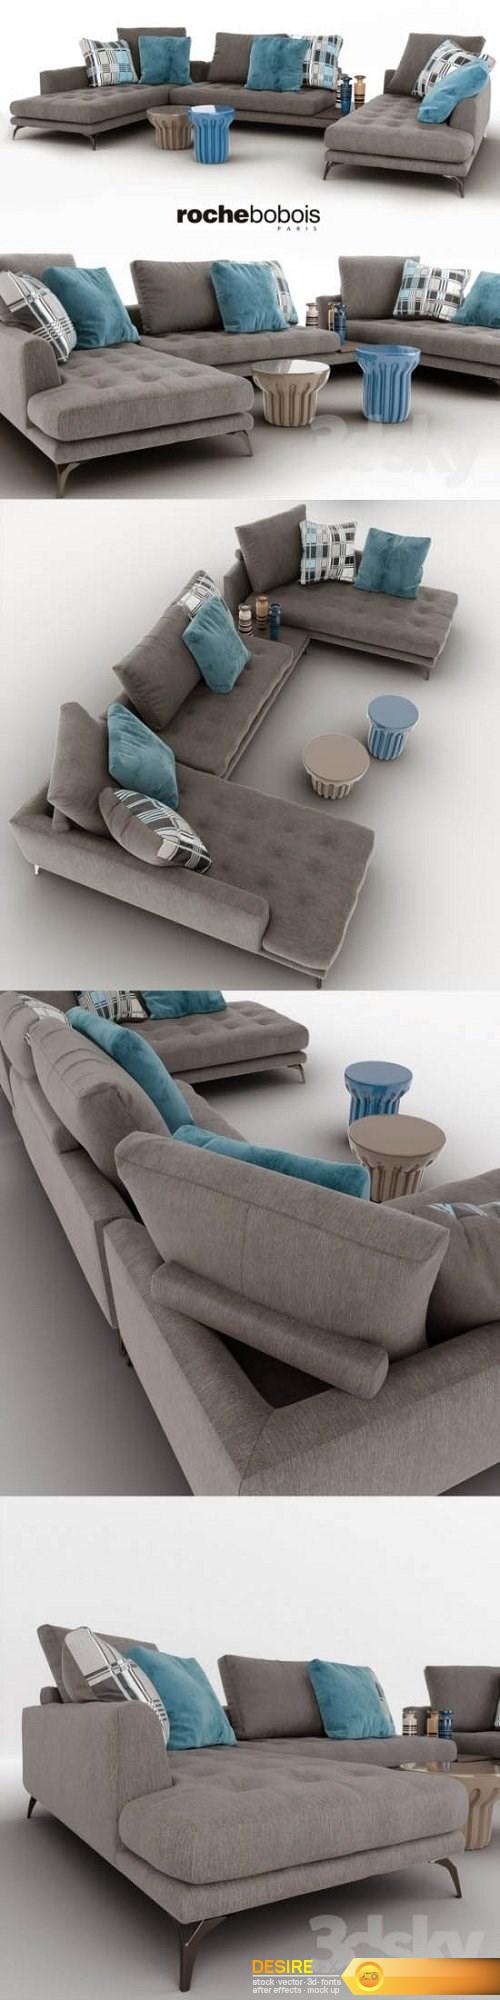 Sofa roche bobois 3d Model